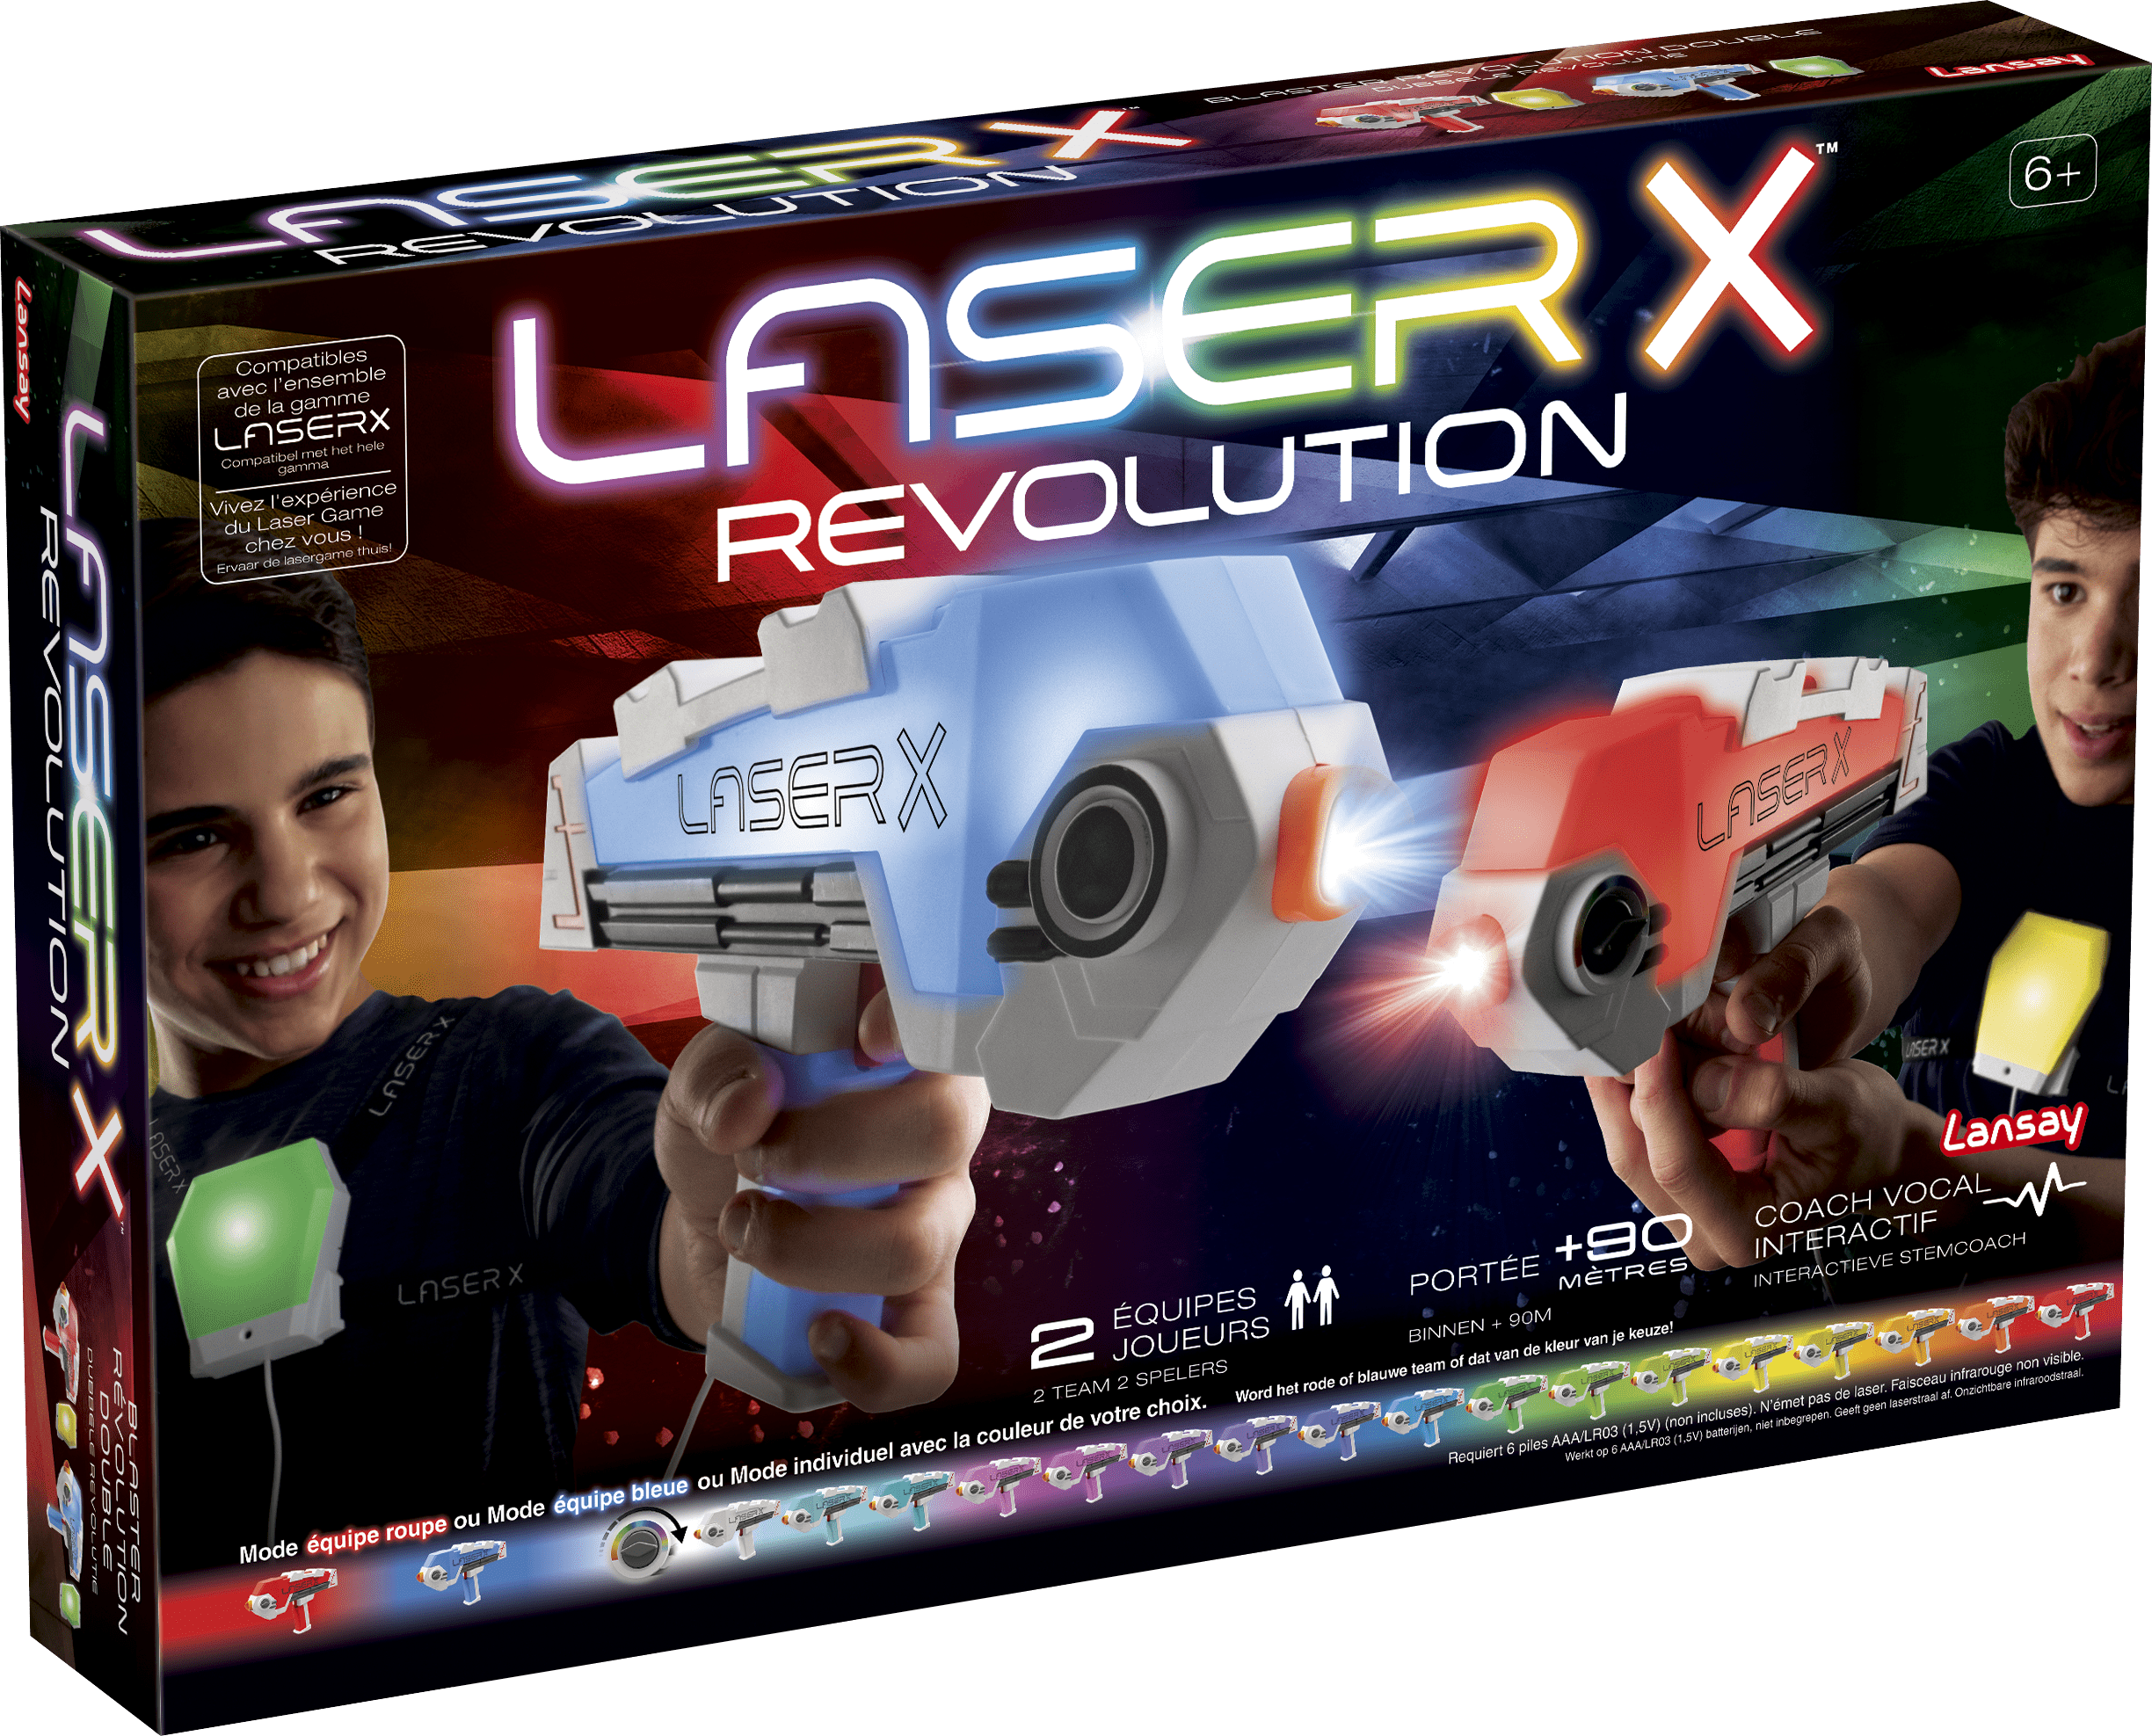 Promo Pistolet Laser X Double Blaster évolution Lansay chez ATAC